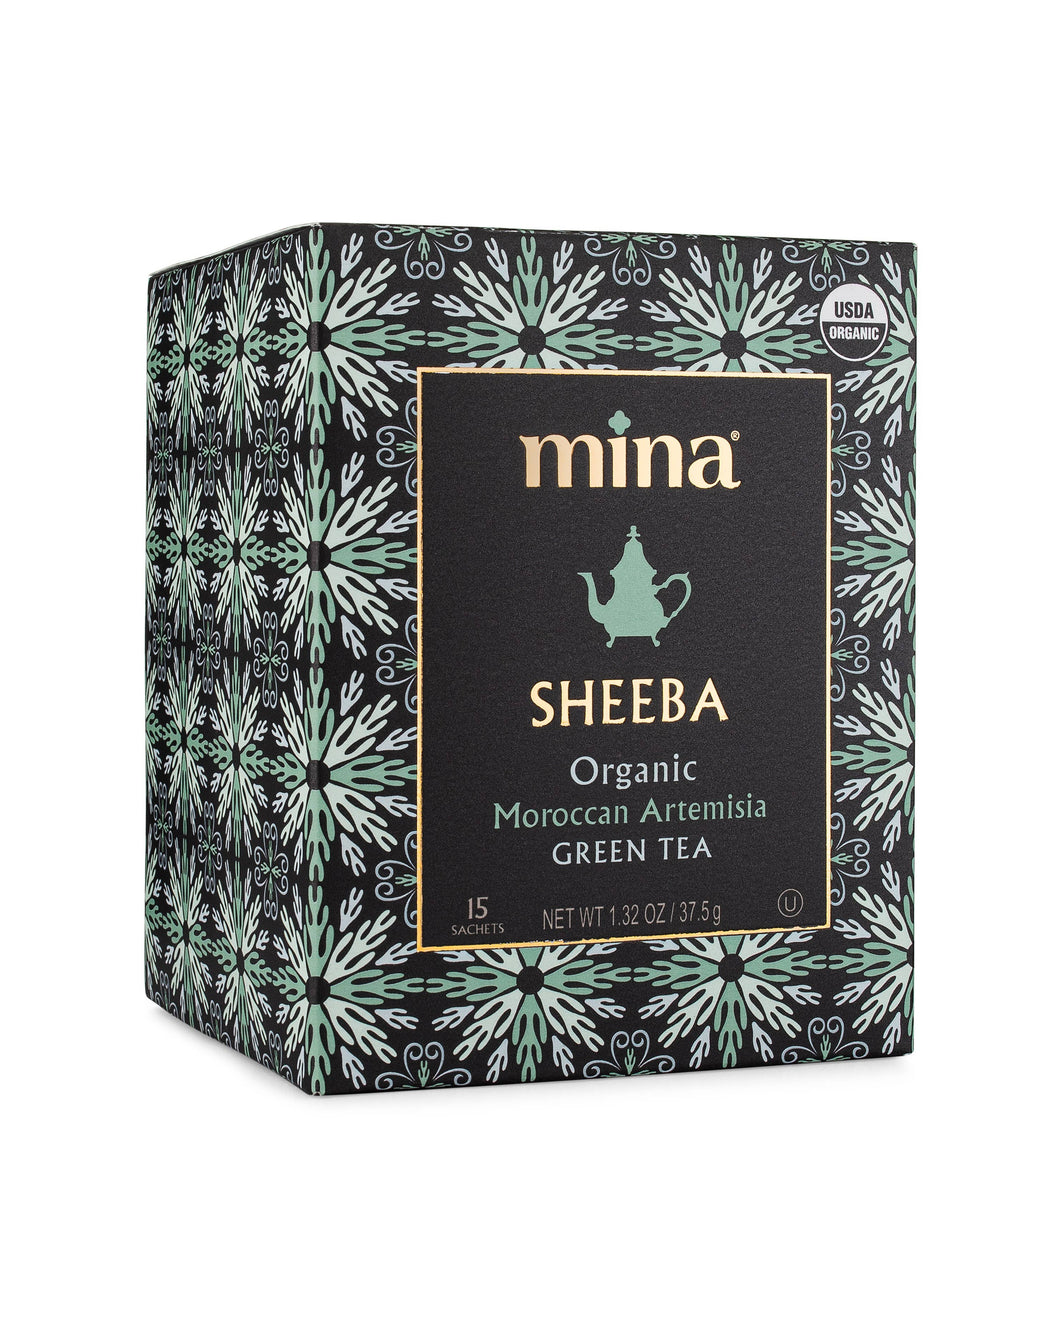 Mina - 15 ct Sheeba Organic Moroccan Artemisia Absinthium Green Tea